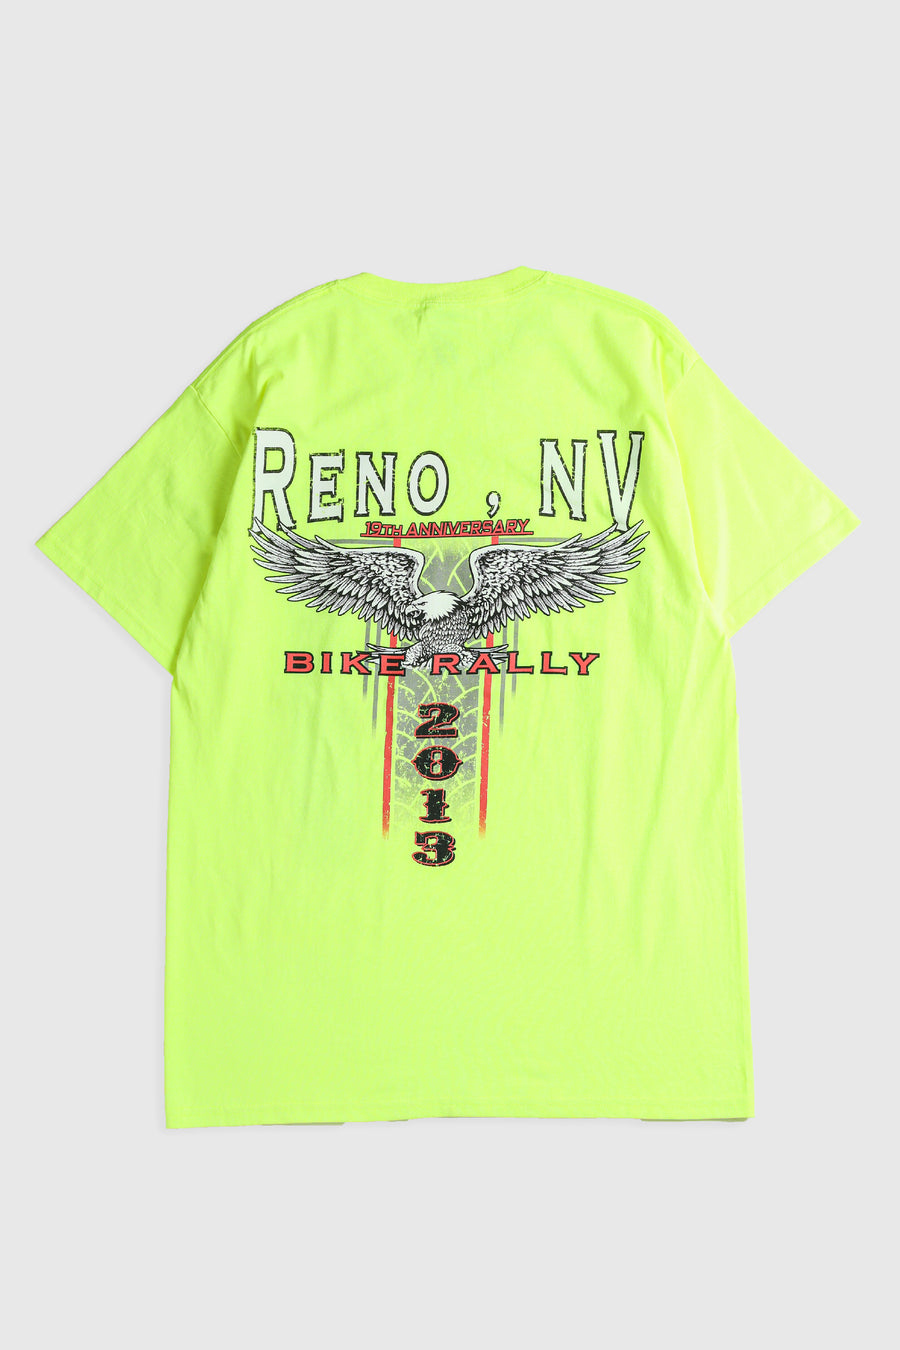 Deadstock Reno Bike Rally Tee - Grey, Neon Yellow, White, Black, Blue